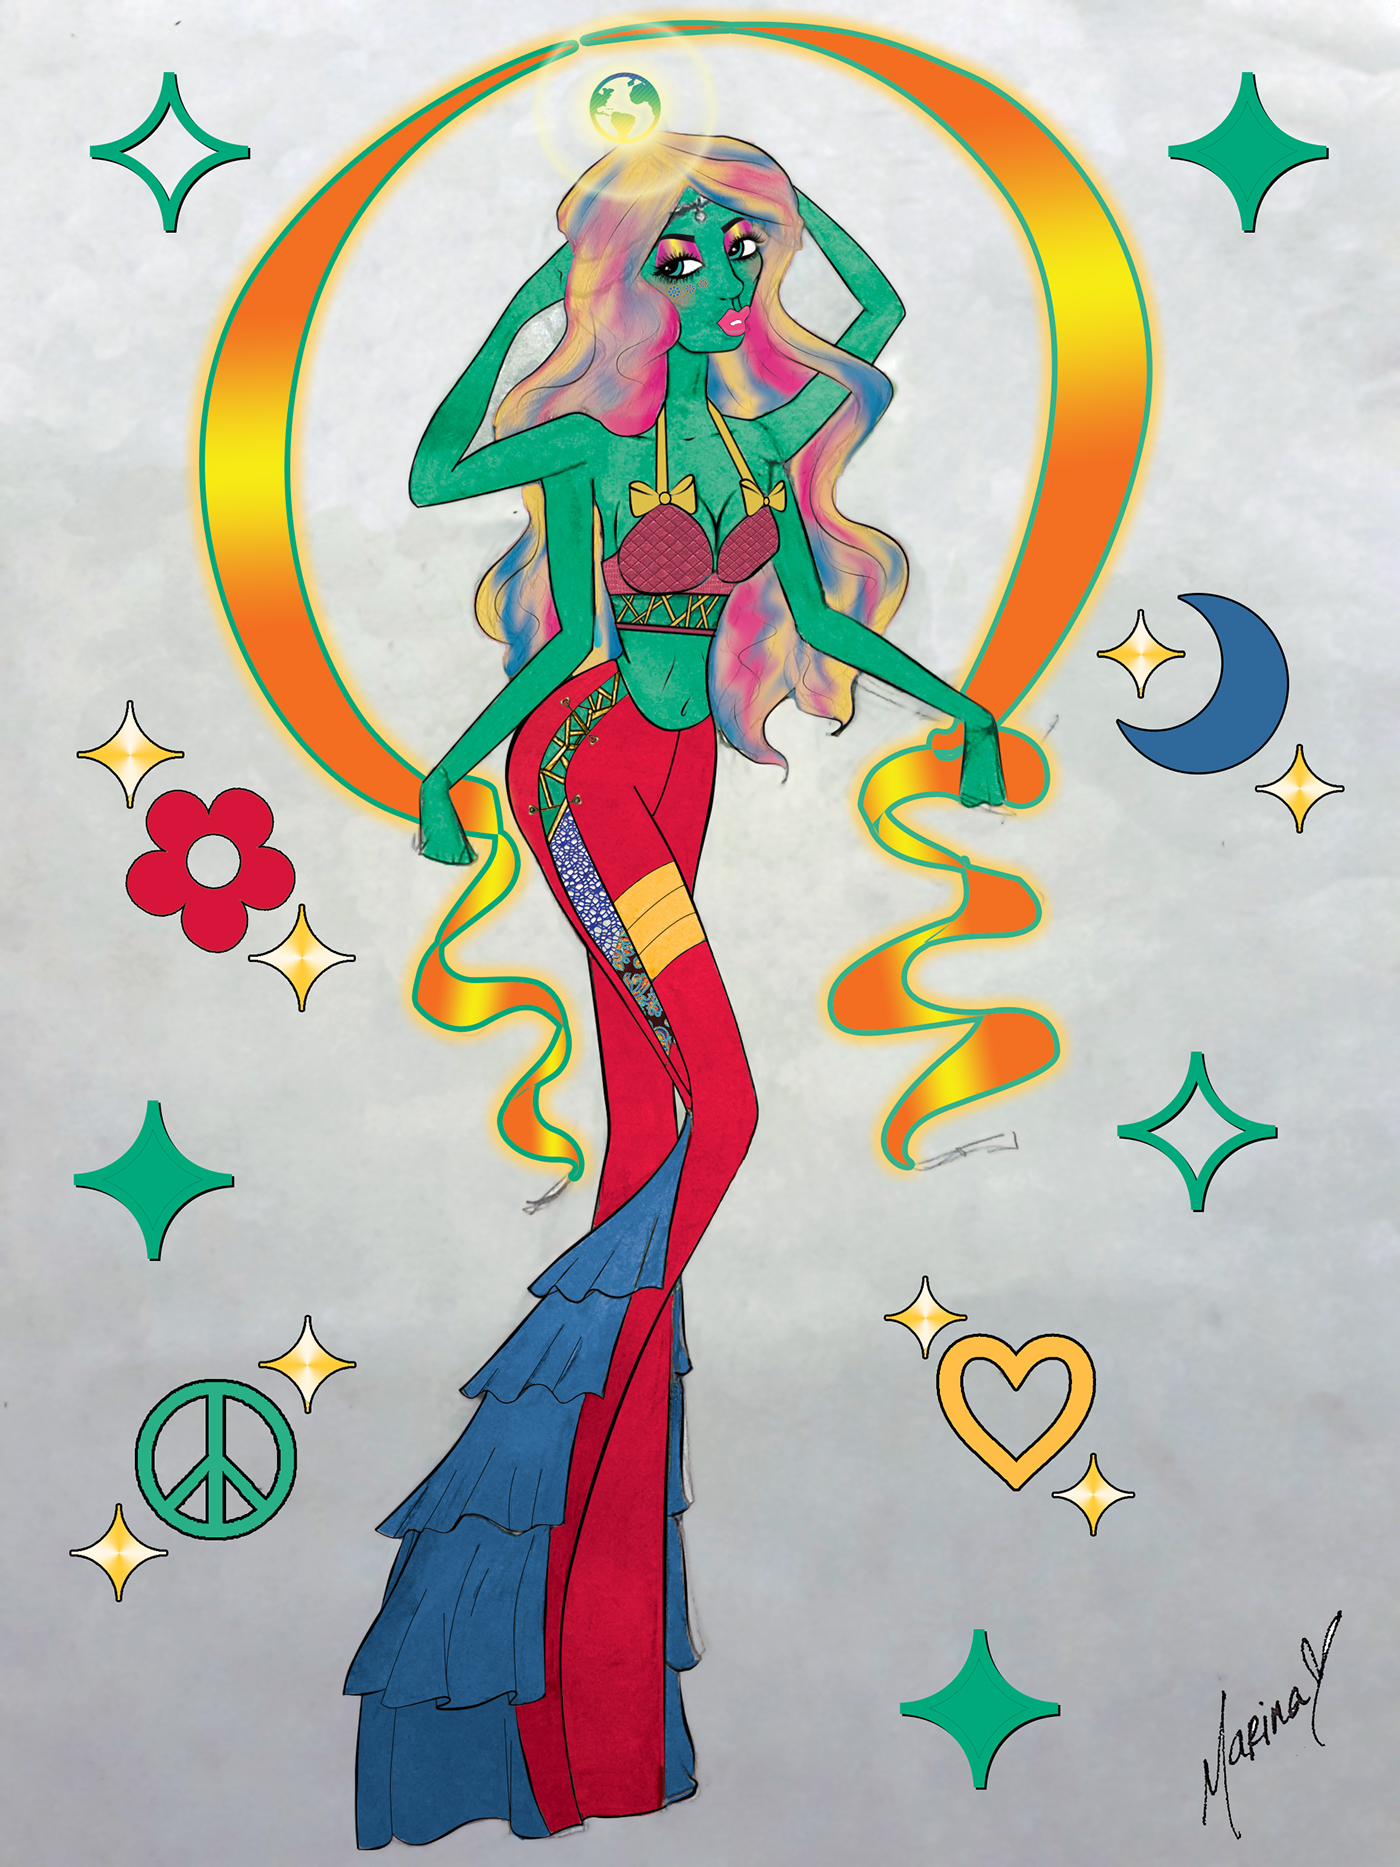 ganesha fashion illustration art inspired symbols moon peace Love heart sparkle